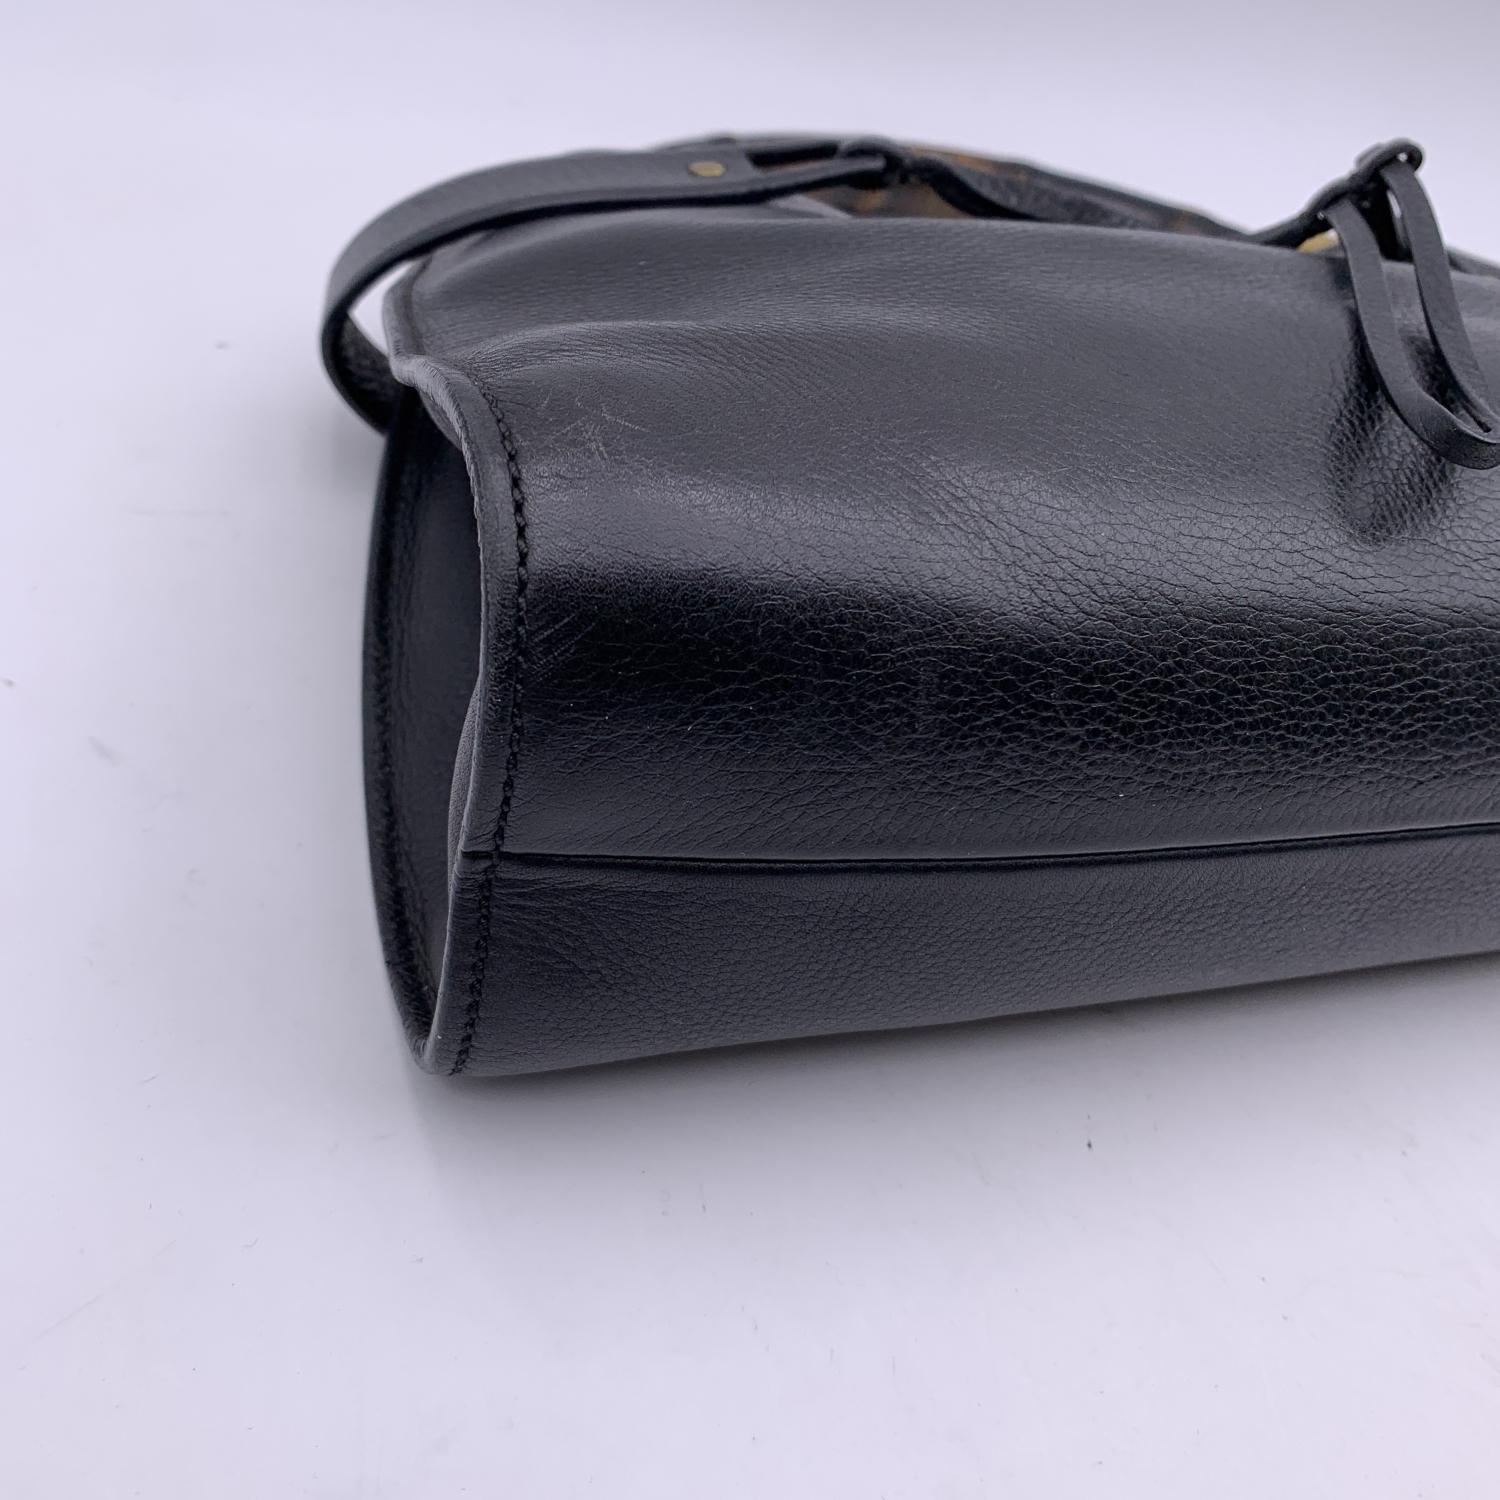 Gucci Black Leather Bamboo Tote Bag Handbag Satchel 6